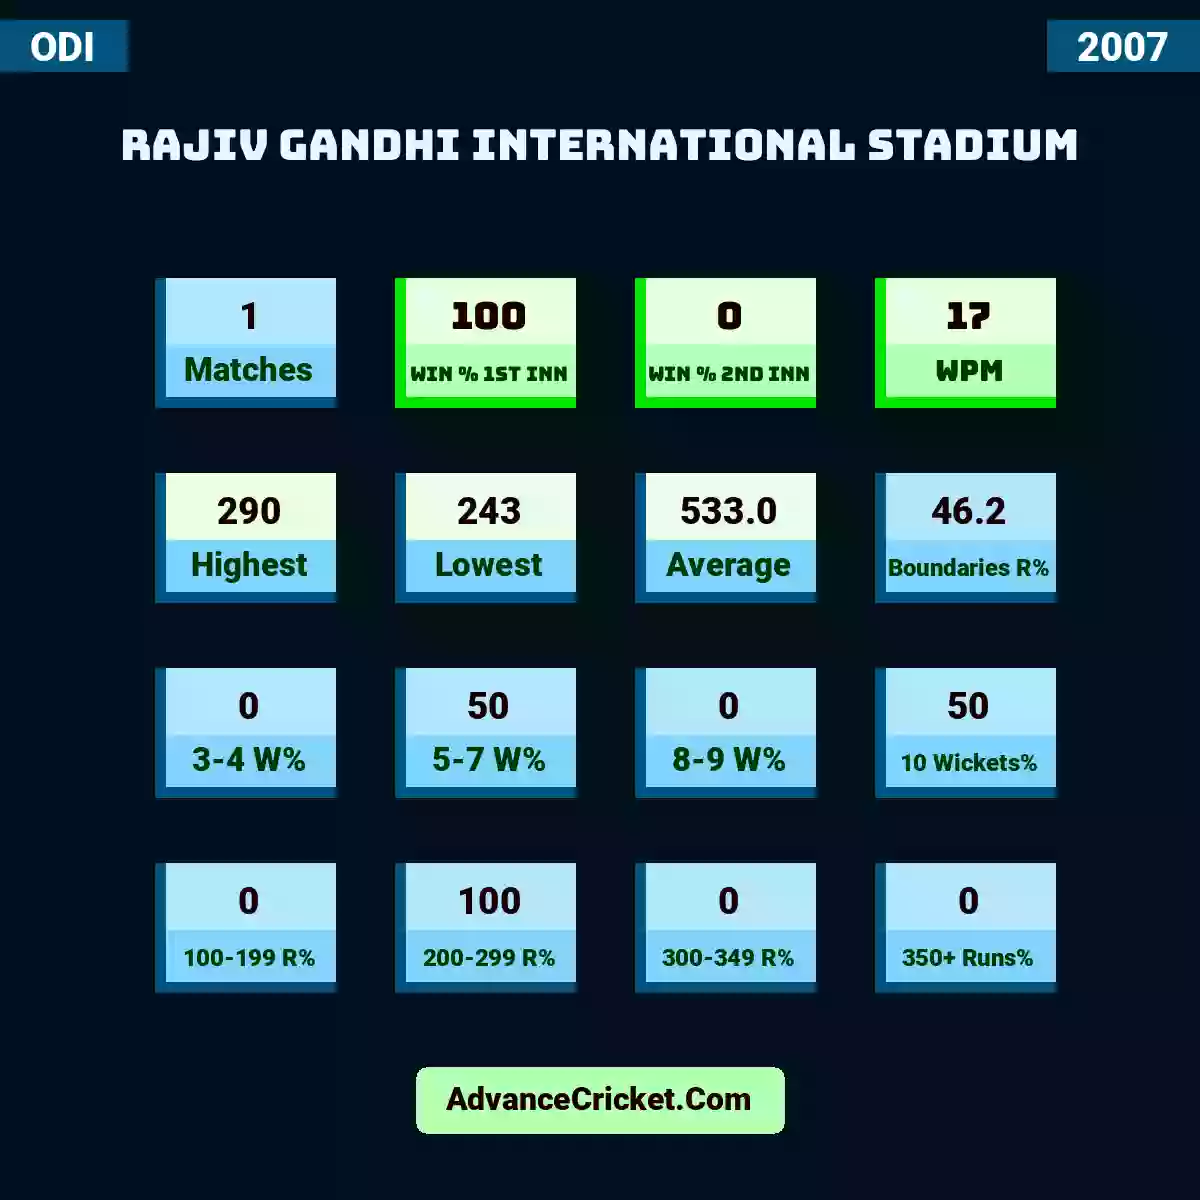 Image showing Rajiv Gandhi International Stadium with Matches: 1, Win % 1st Inn: 100, Win % 2nd Inn: 0, WPM: 17, Highest: 290, Lowest: 243, Average: 533.0, Boundaries R%: 46.2, 3-4 W%: 0, 5-7 W%: 50, 8-9 W%: 0, 10 Wickets%: 50, 100-199 R%: 0, 200-299 R%: 100, 300-349 R%: 0, 350+ Runs%: 0.